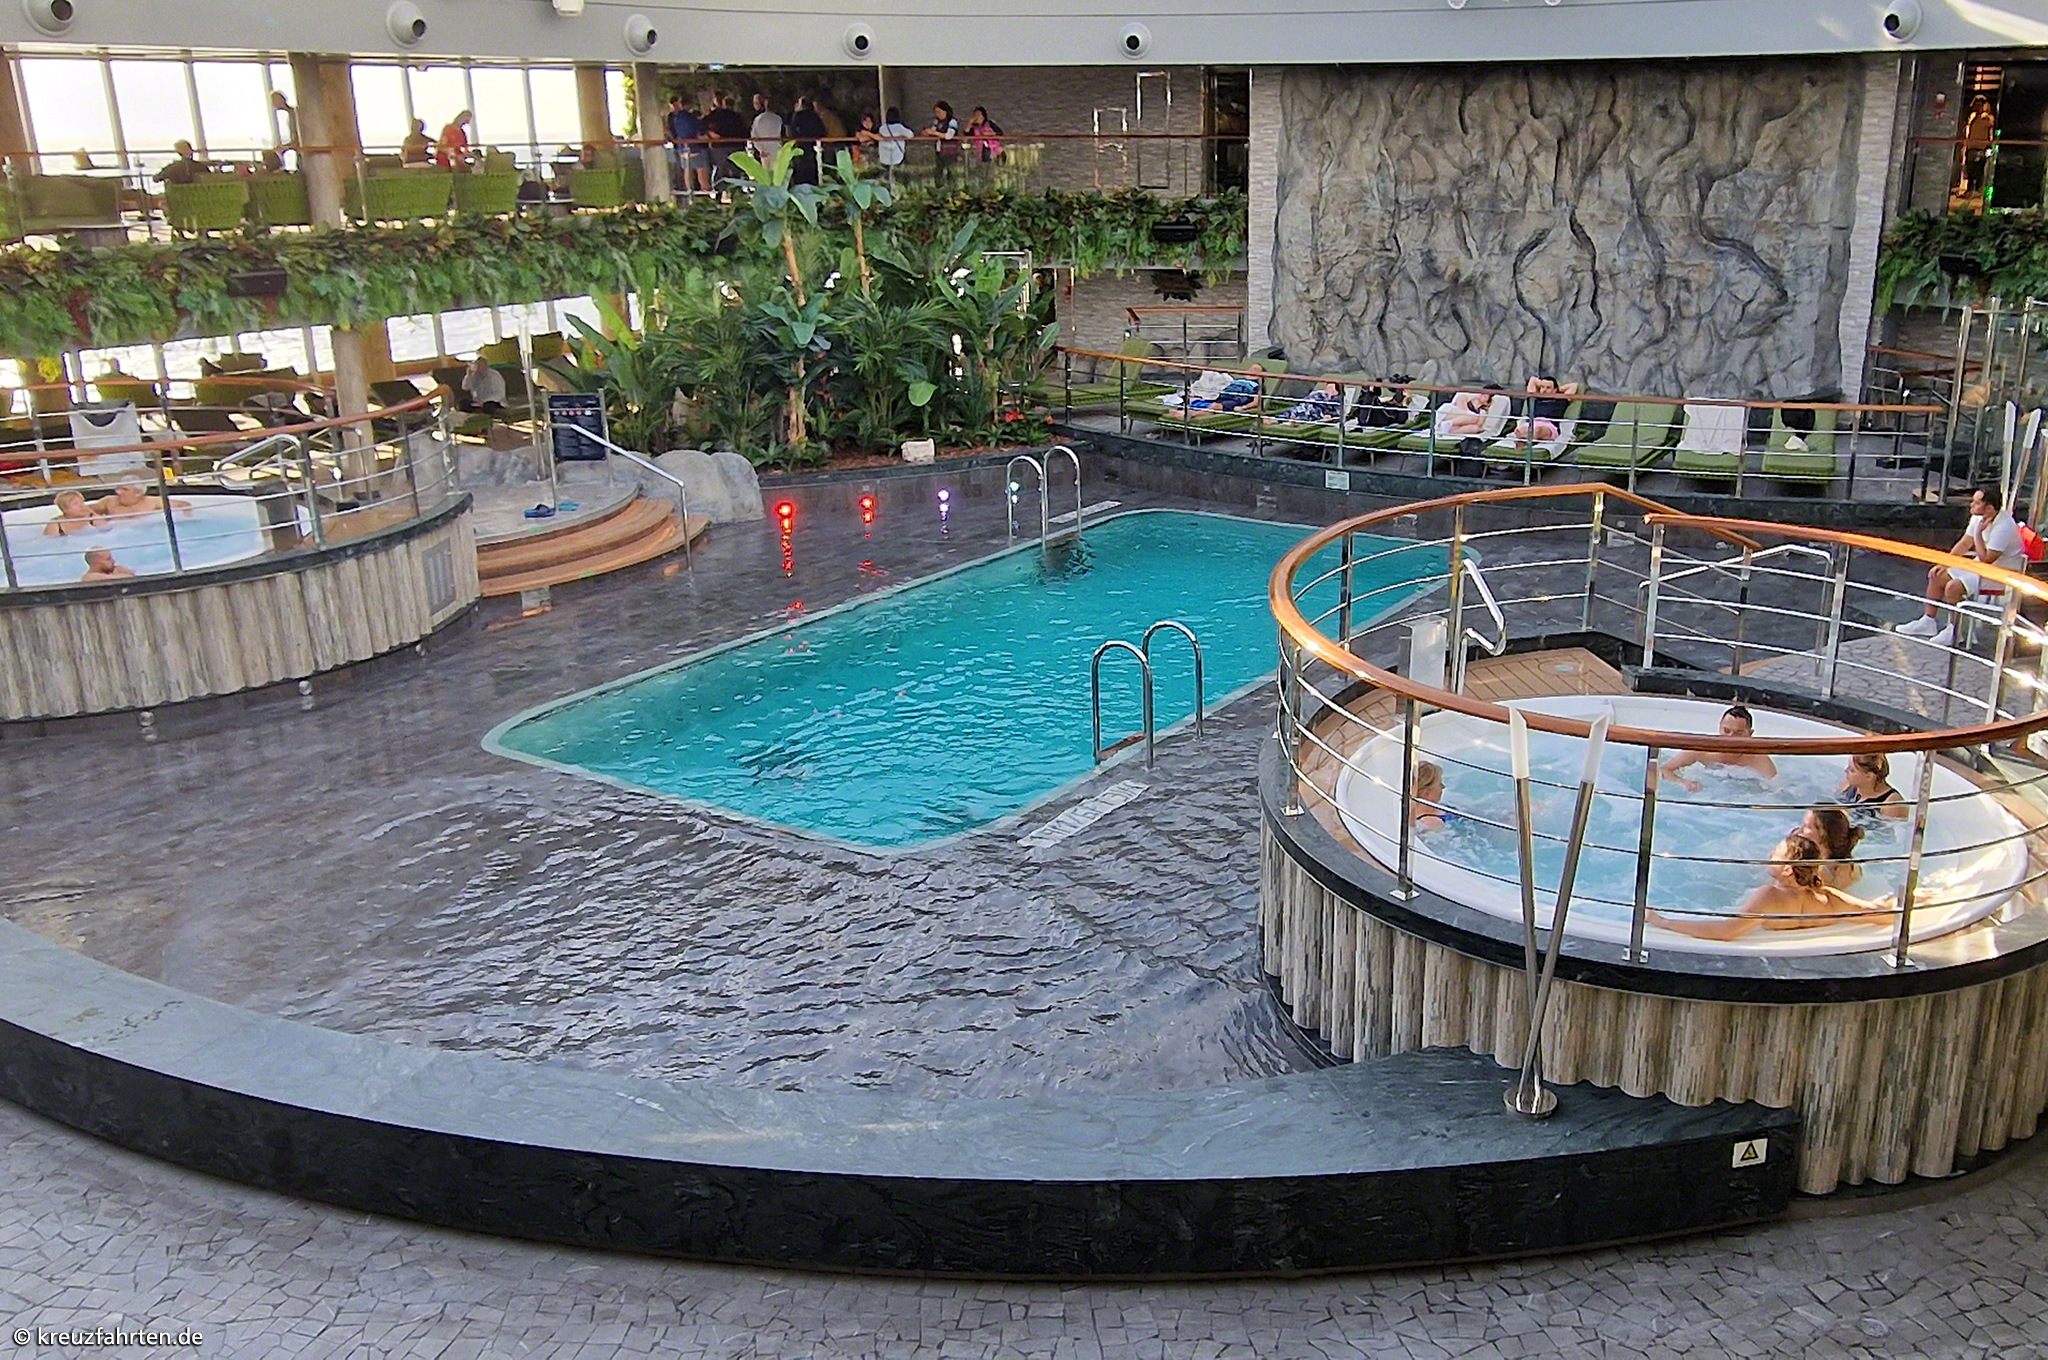 Jungle Pool Lounge